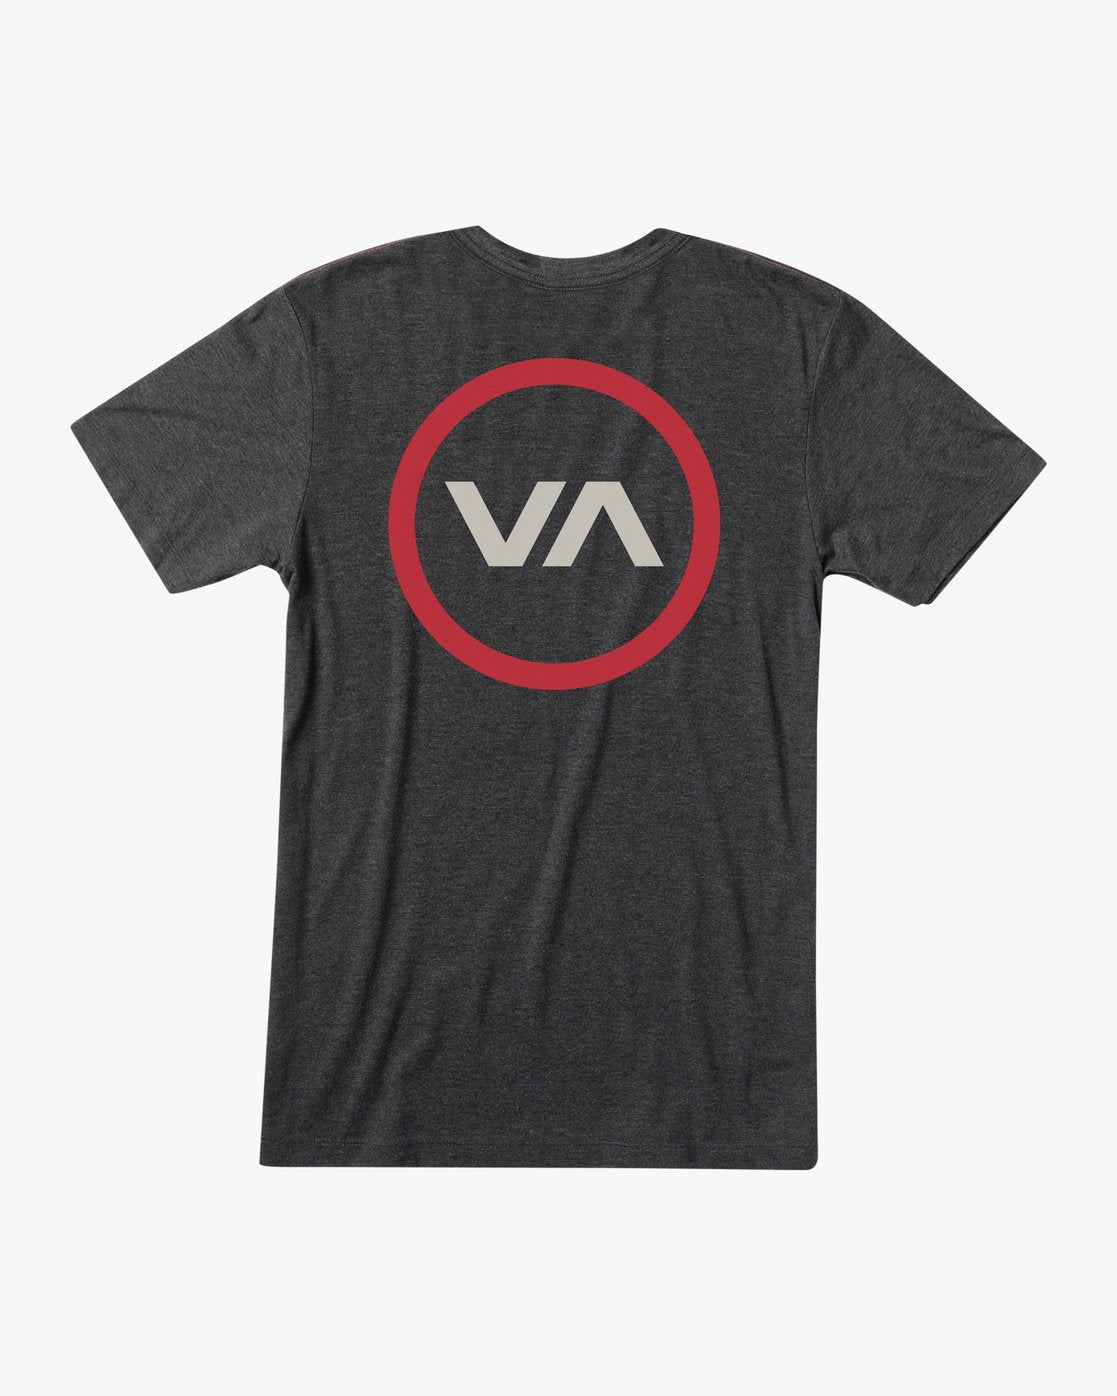 RVCA VA Mod T-Shirt Black - Freeride Boardshop